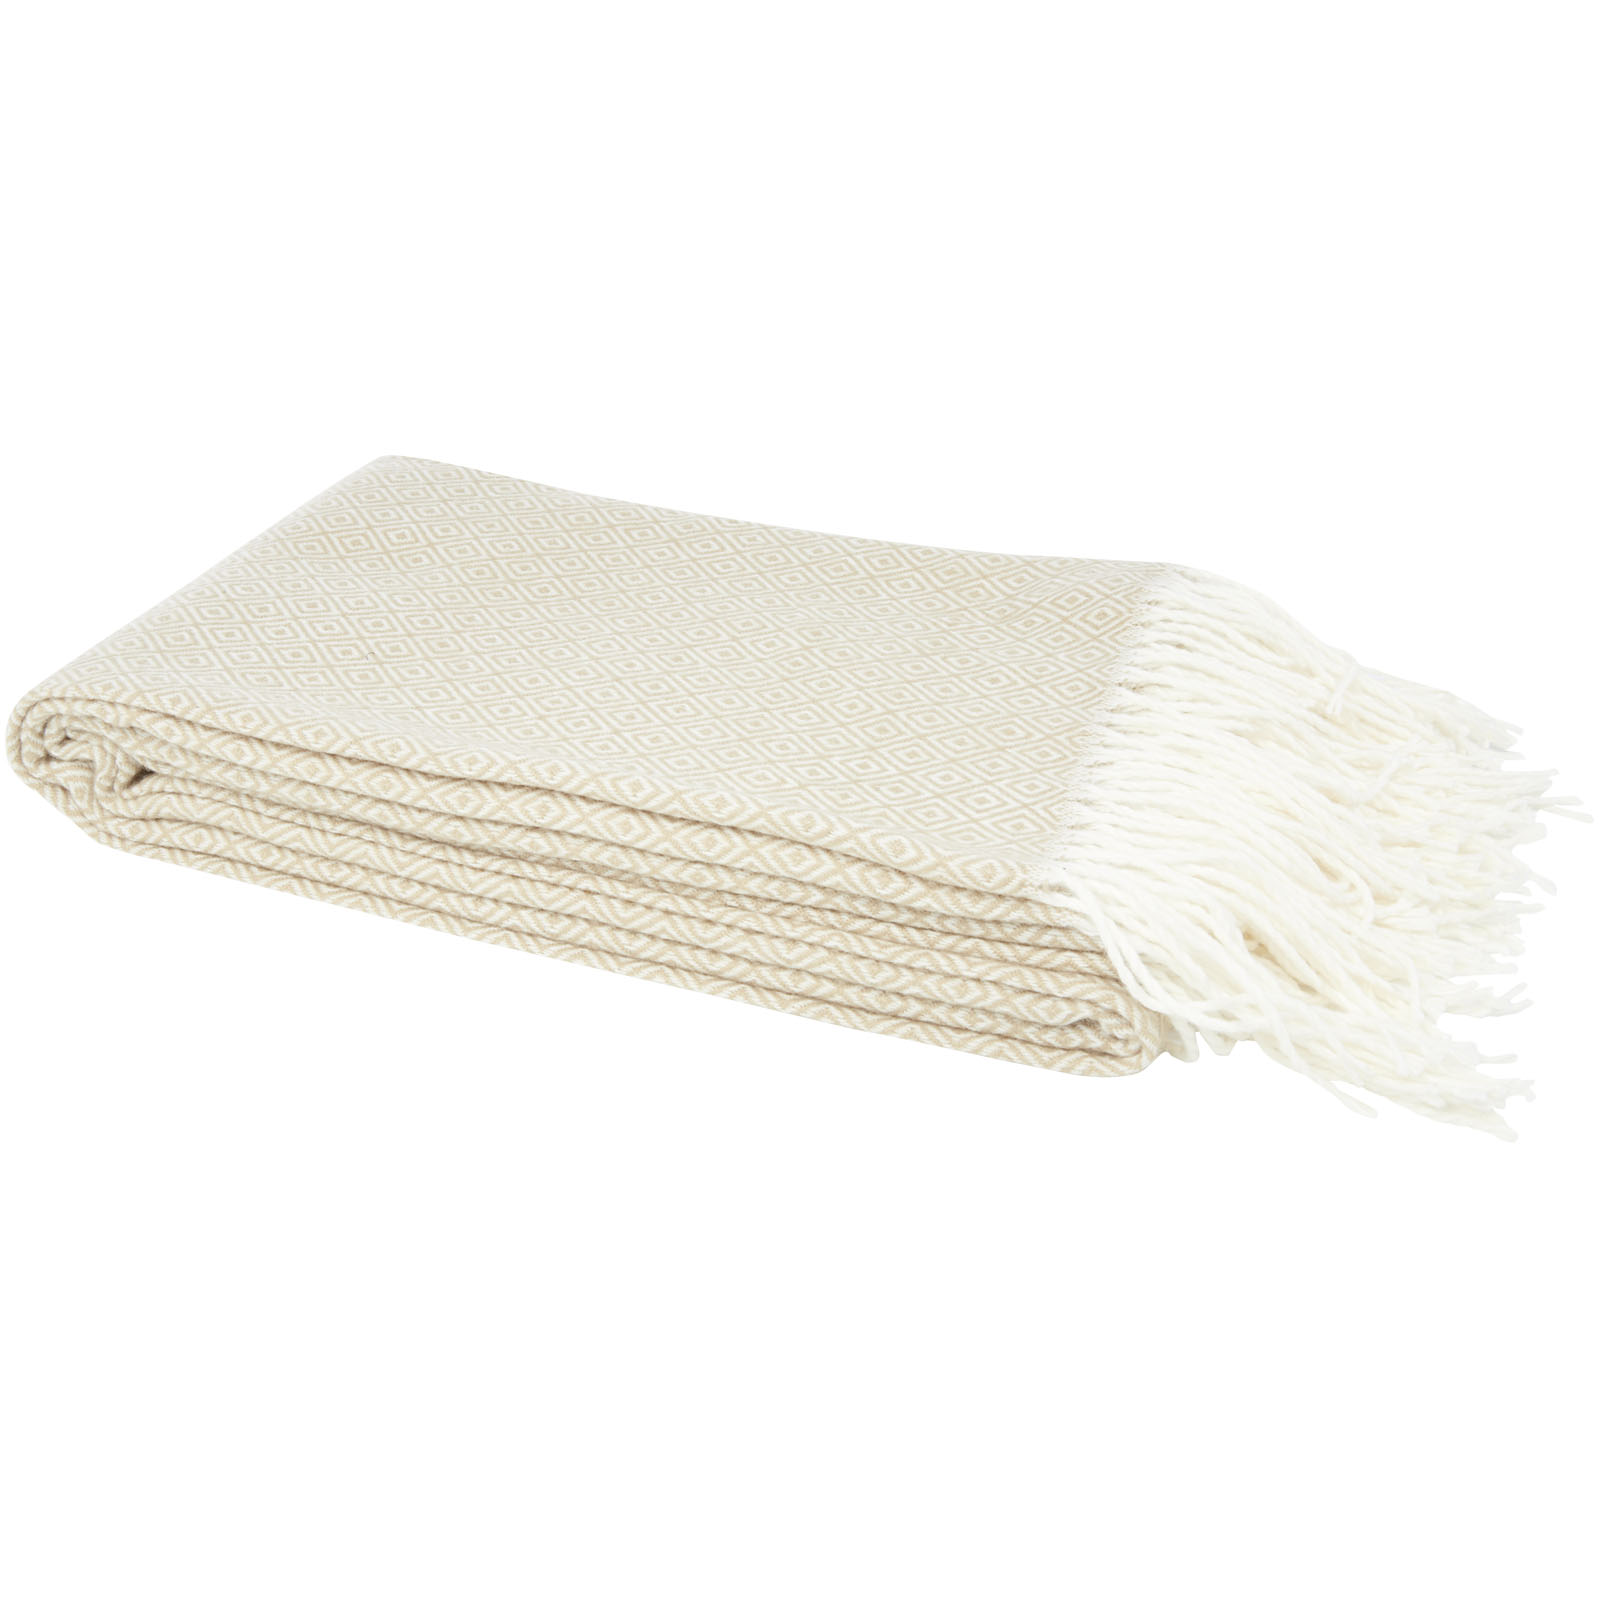 Blankets - Zinnia summer blanket